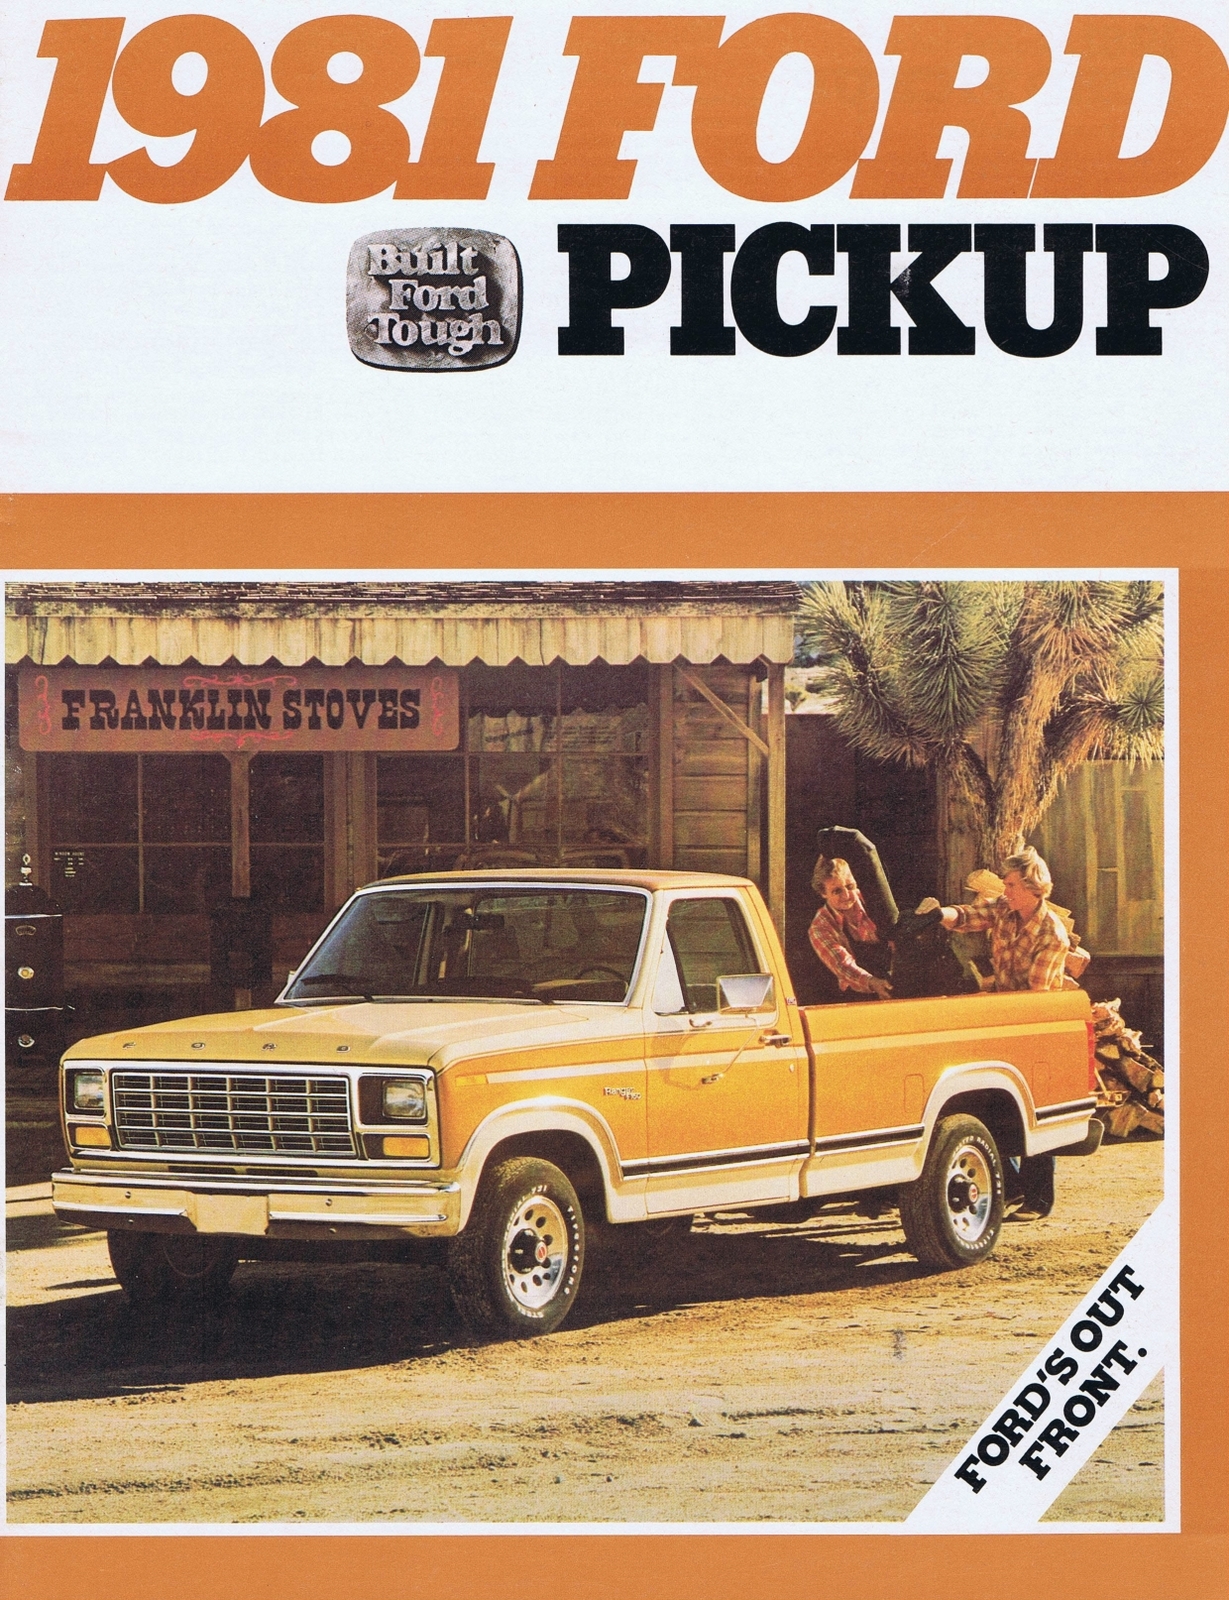 n_1981 Ford Pickup (Cdn)-01.jpg